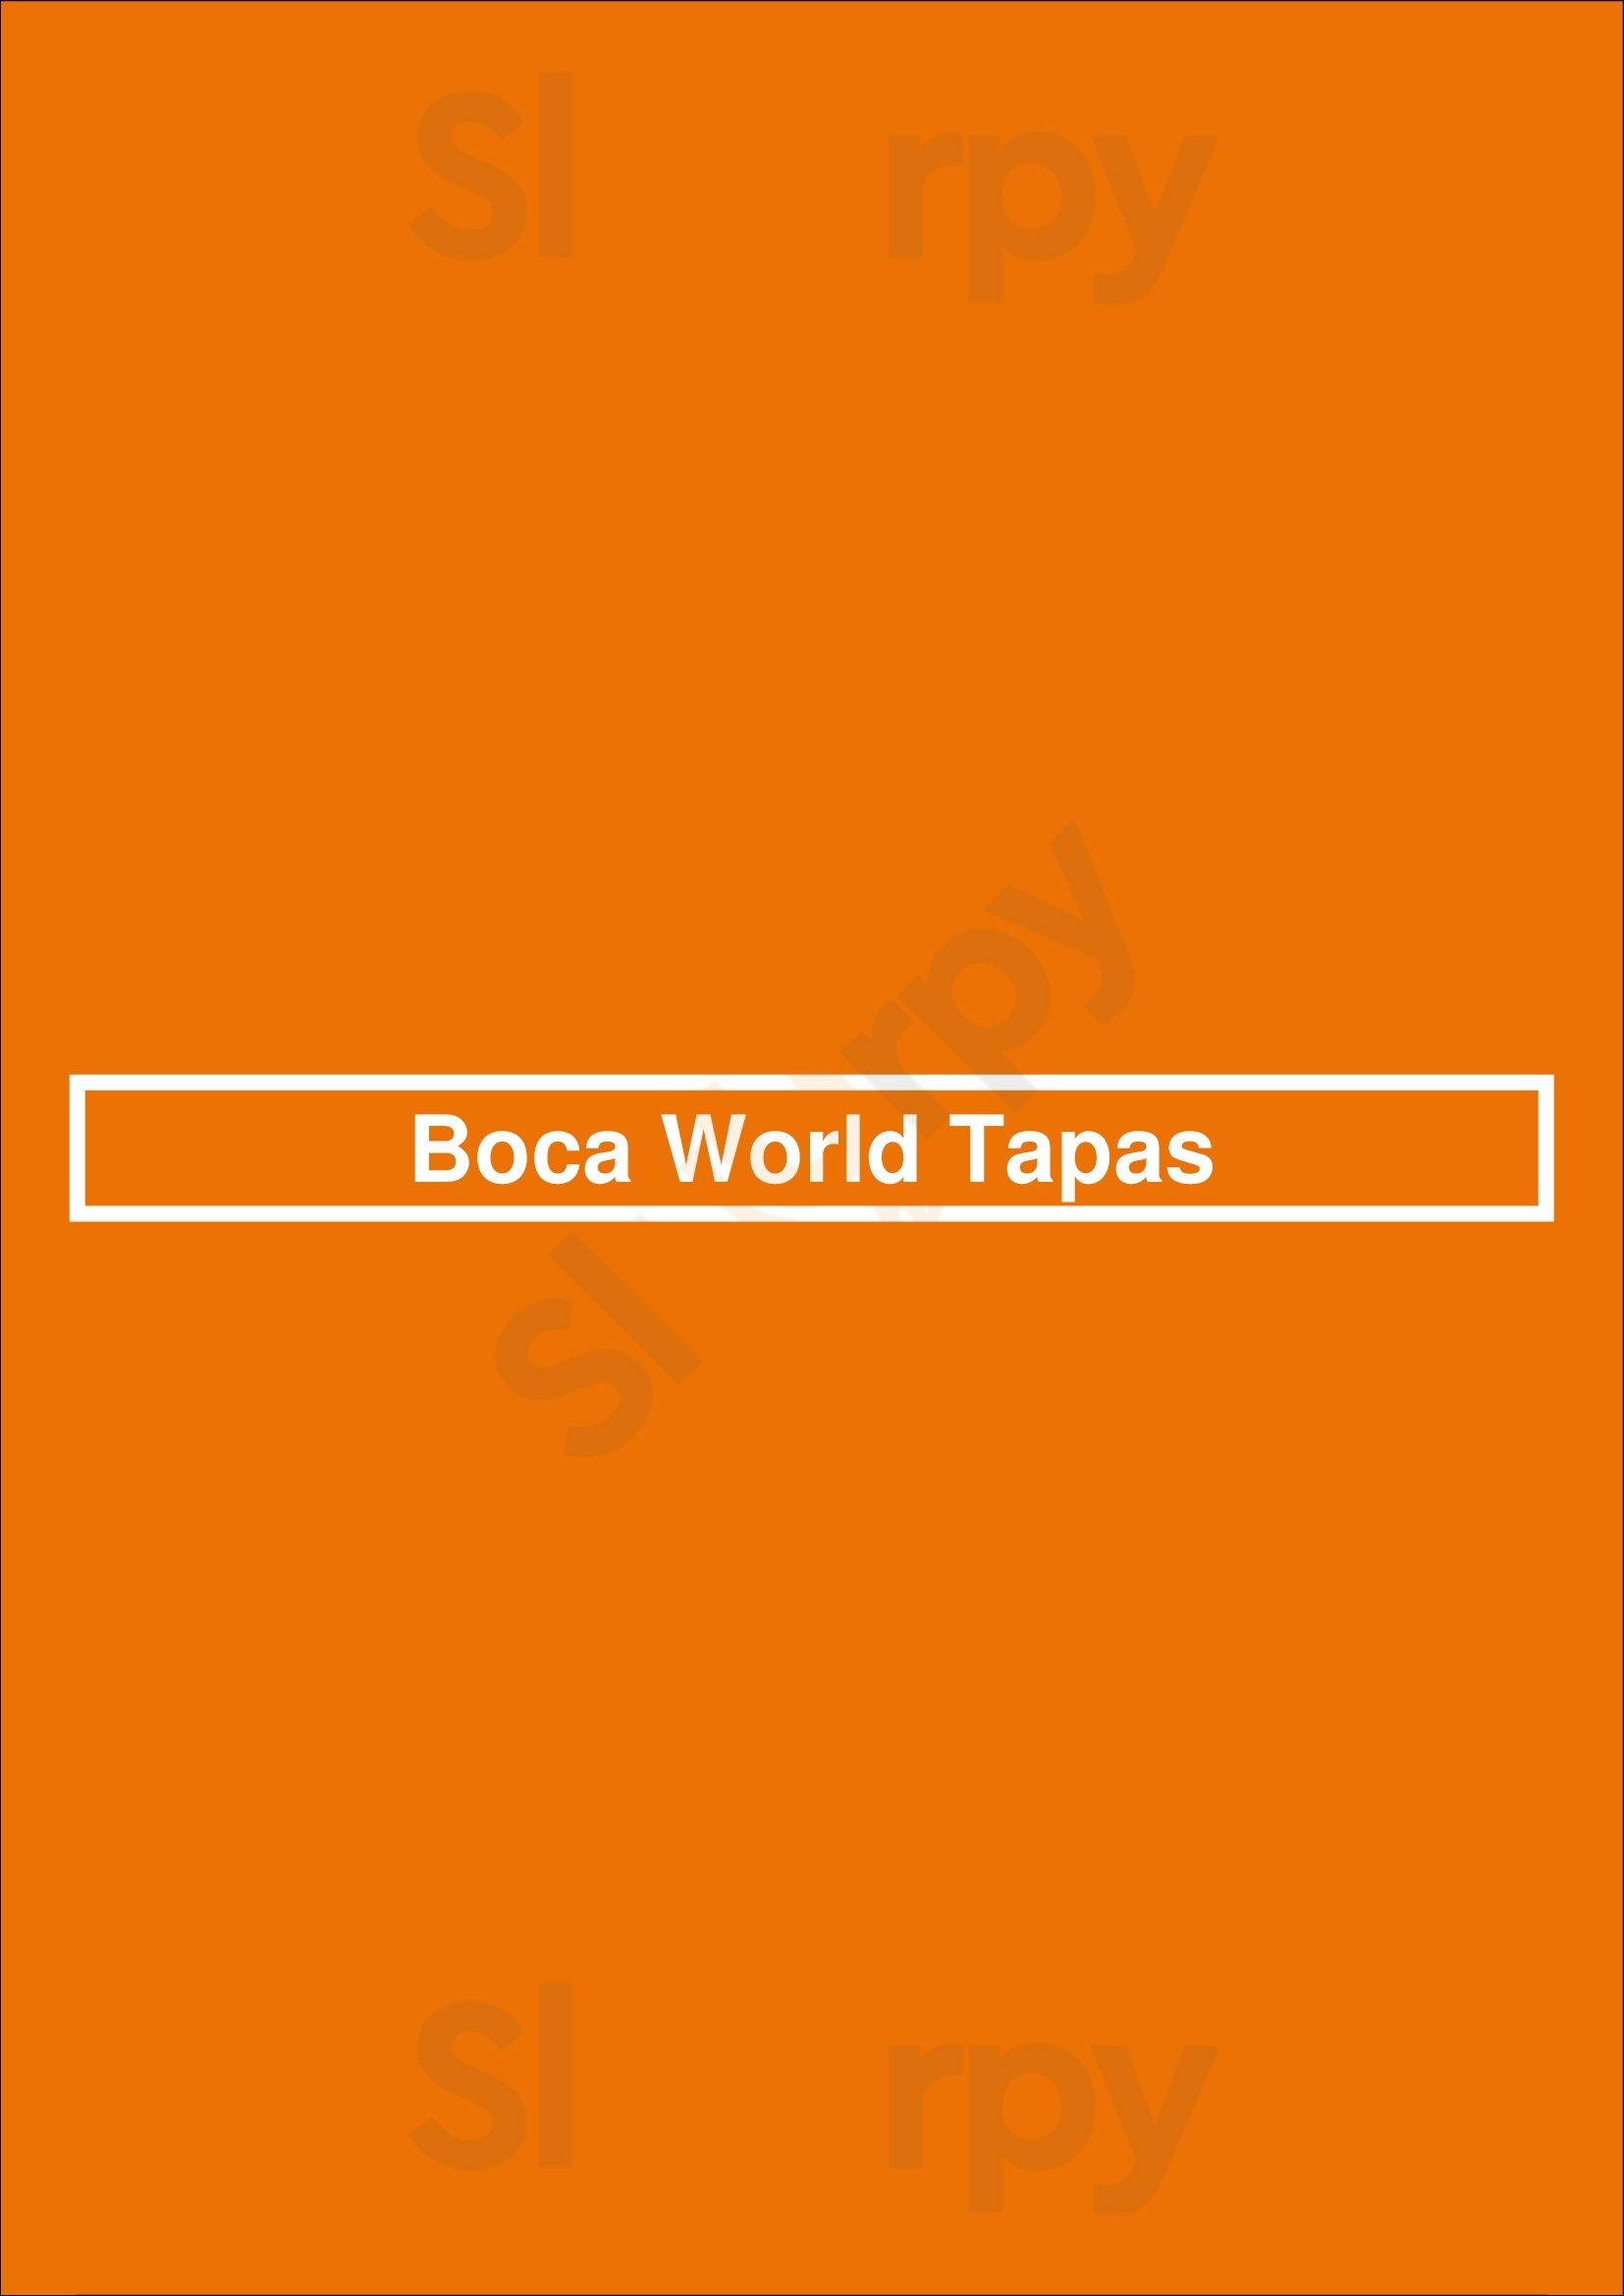 Boca World Tapas Haarlem Menu - 1